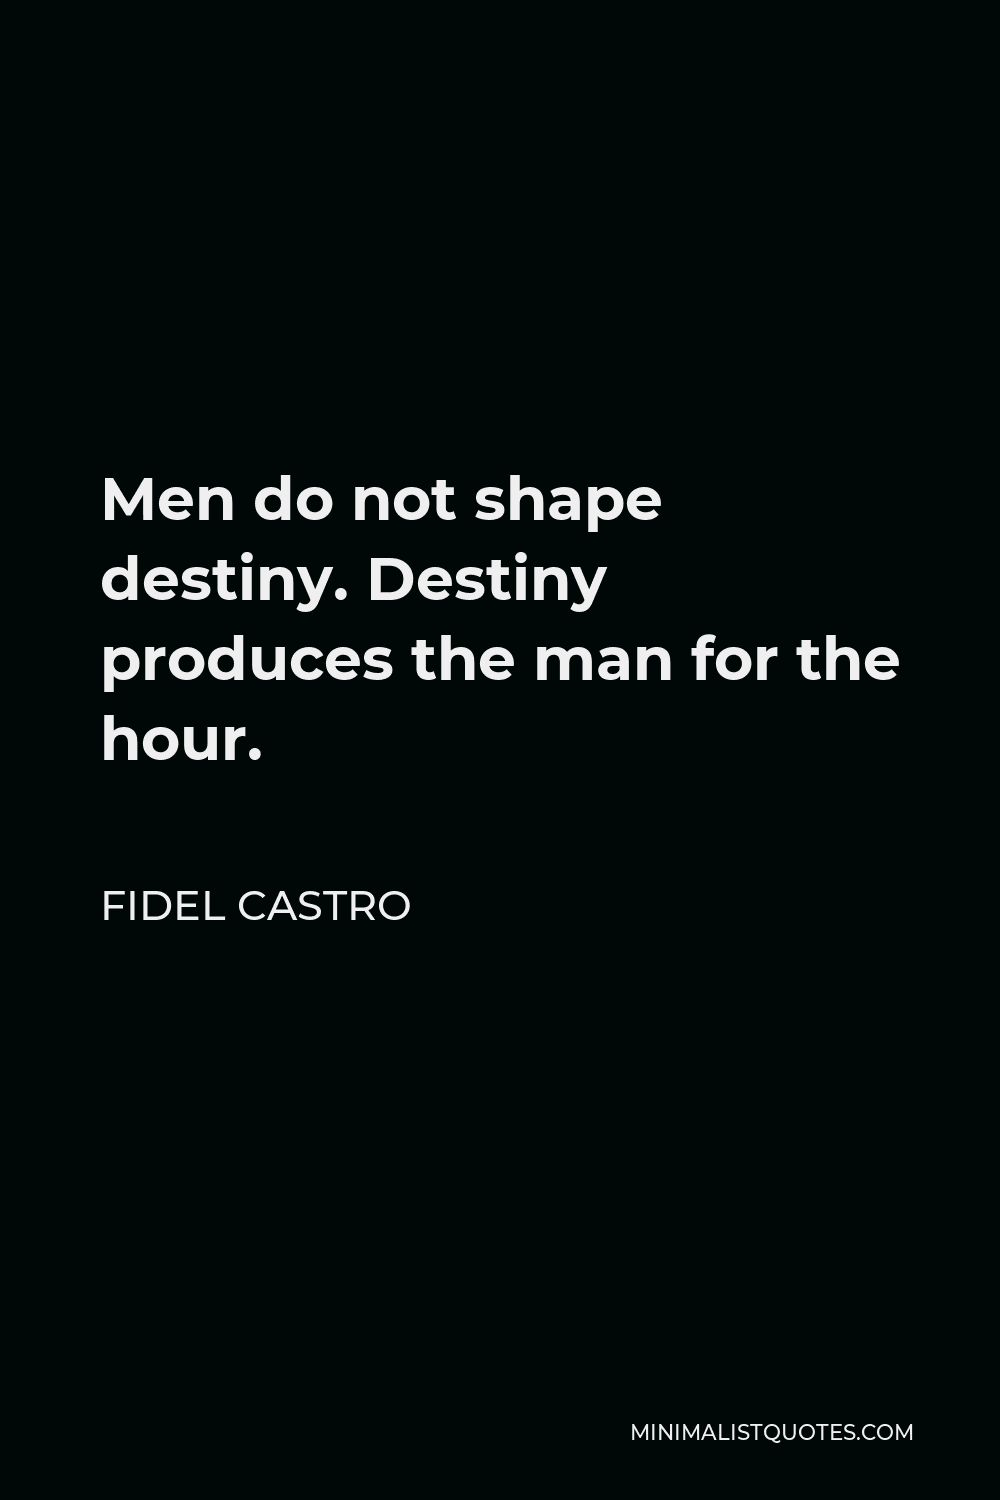 Fidel Castro Quote - Men do not shape destiny. Destiny produces the man for the hour.